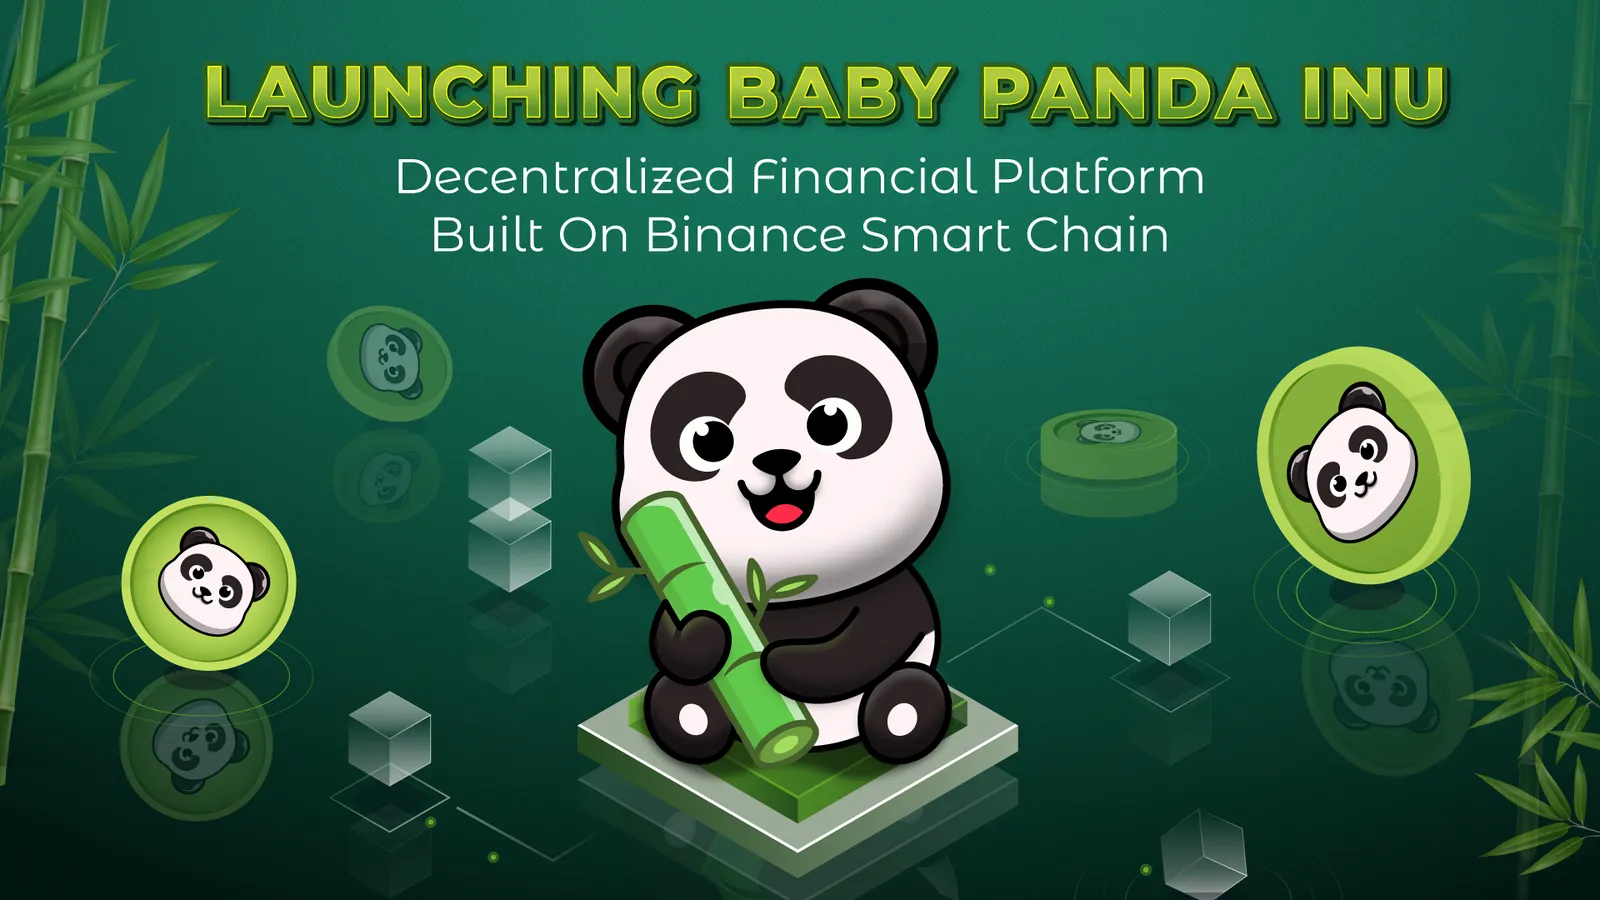 INTRODUCTION TO BABY PANDA INU